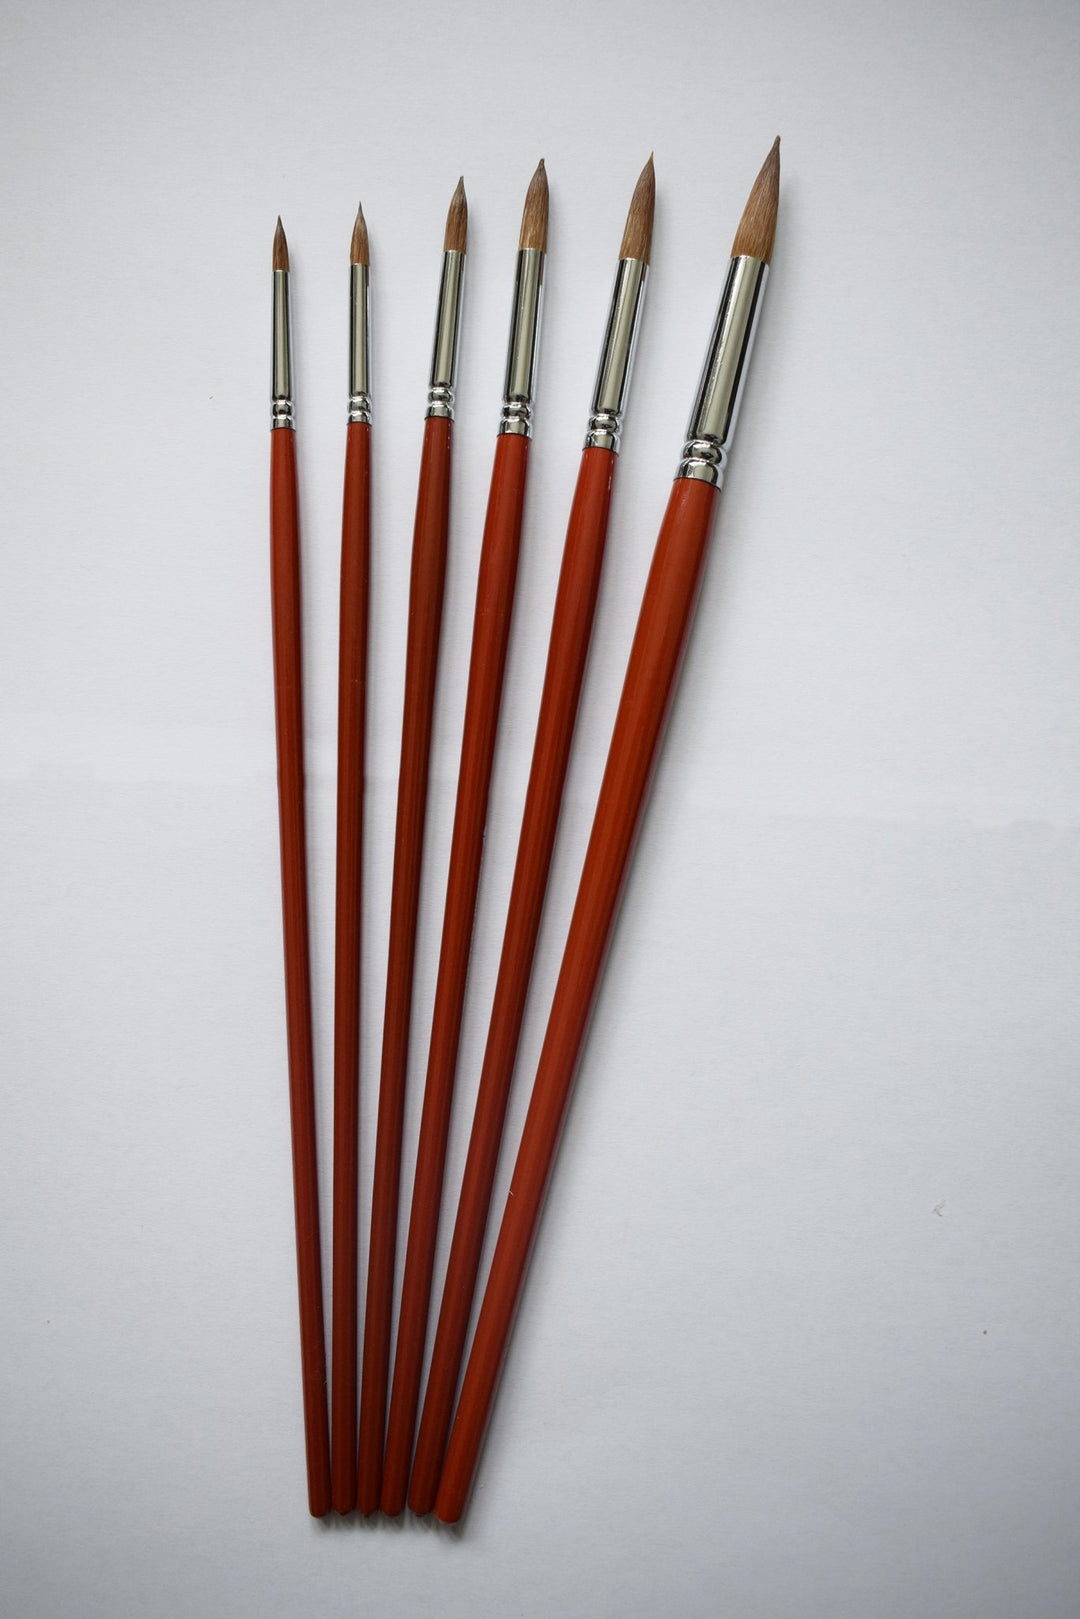 Sable Round Head Brush Set of 6 (sizes 2,4,6,8,10,12) - The Fine Art Warehouse